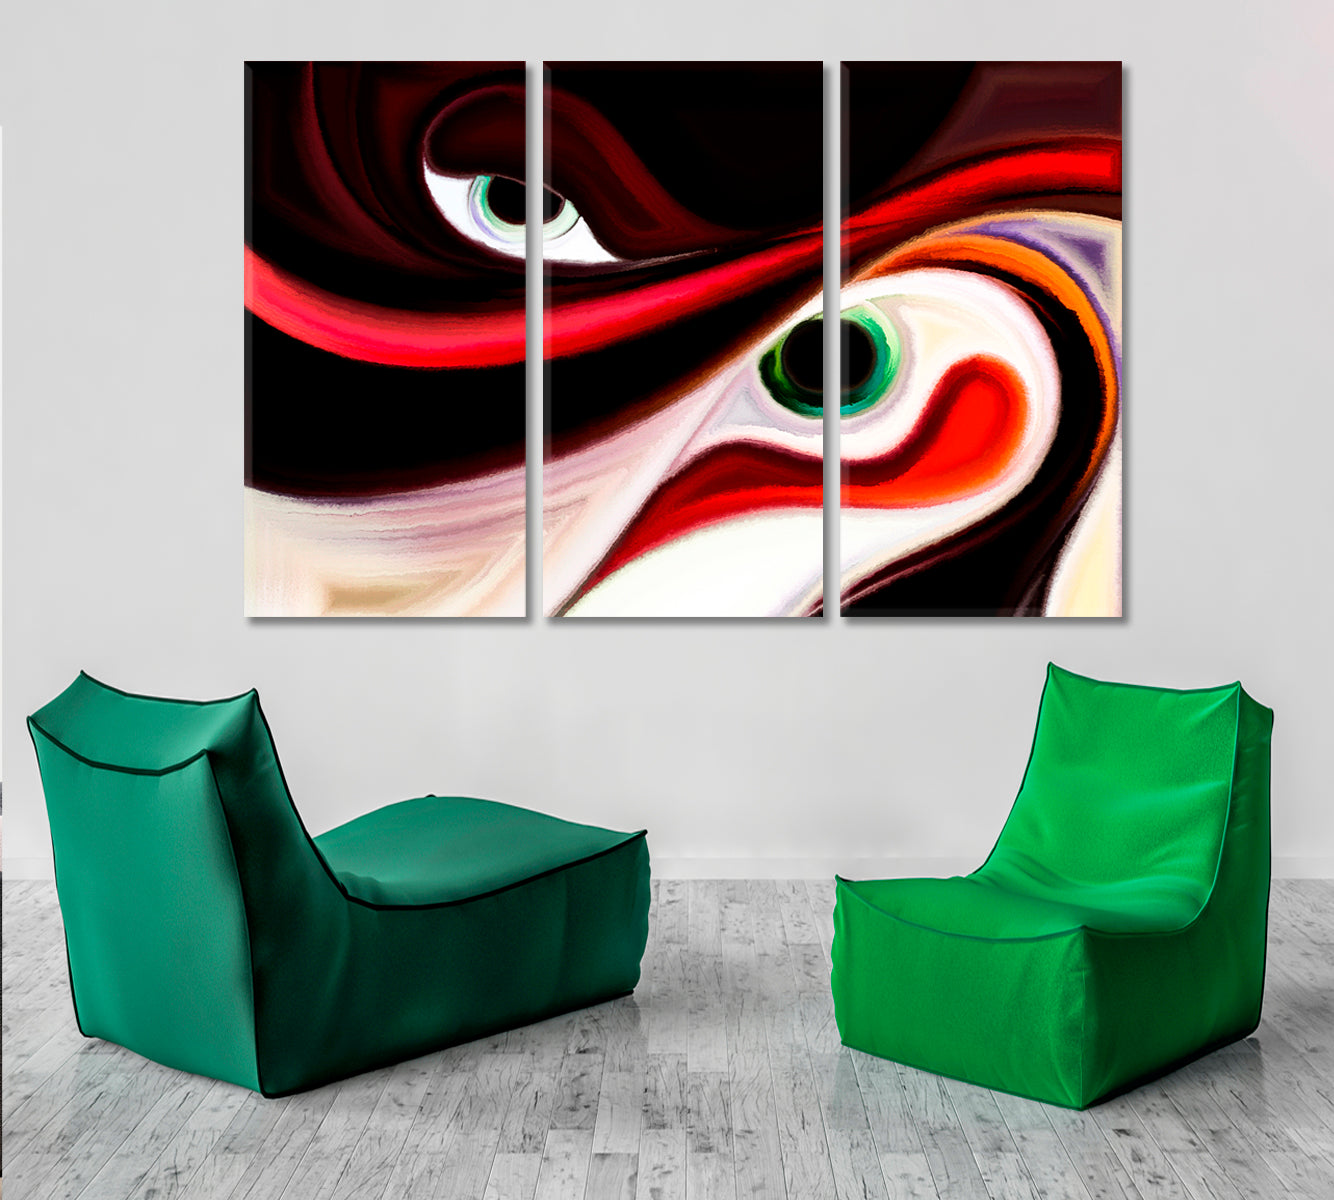 Yin Yang Vibrant Abstract Waves and Curves Imagination Design Abstract Art Print Artesty 3 panels 36" x 24" 